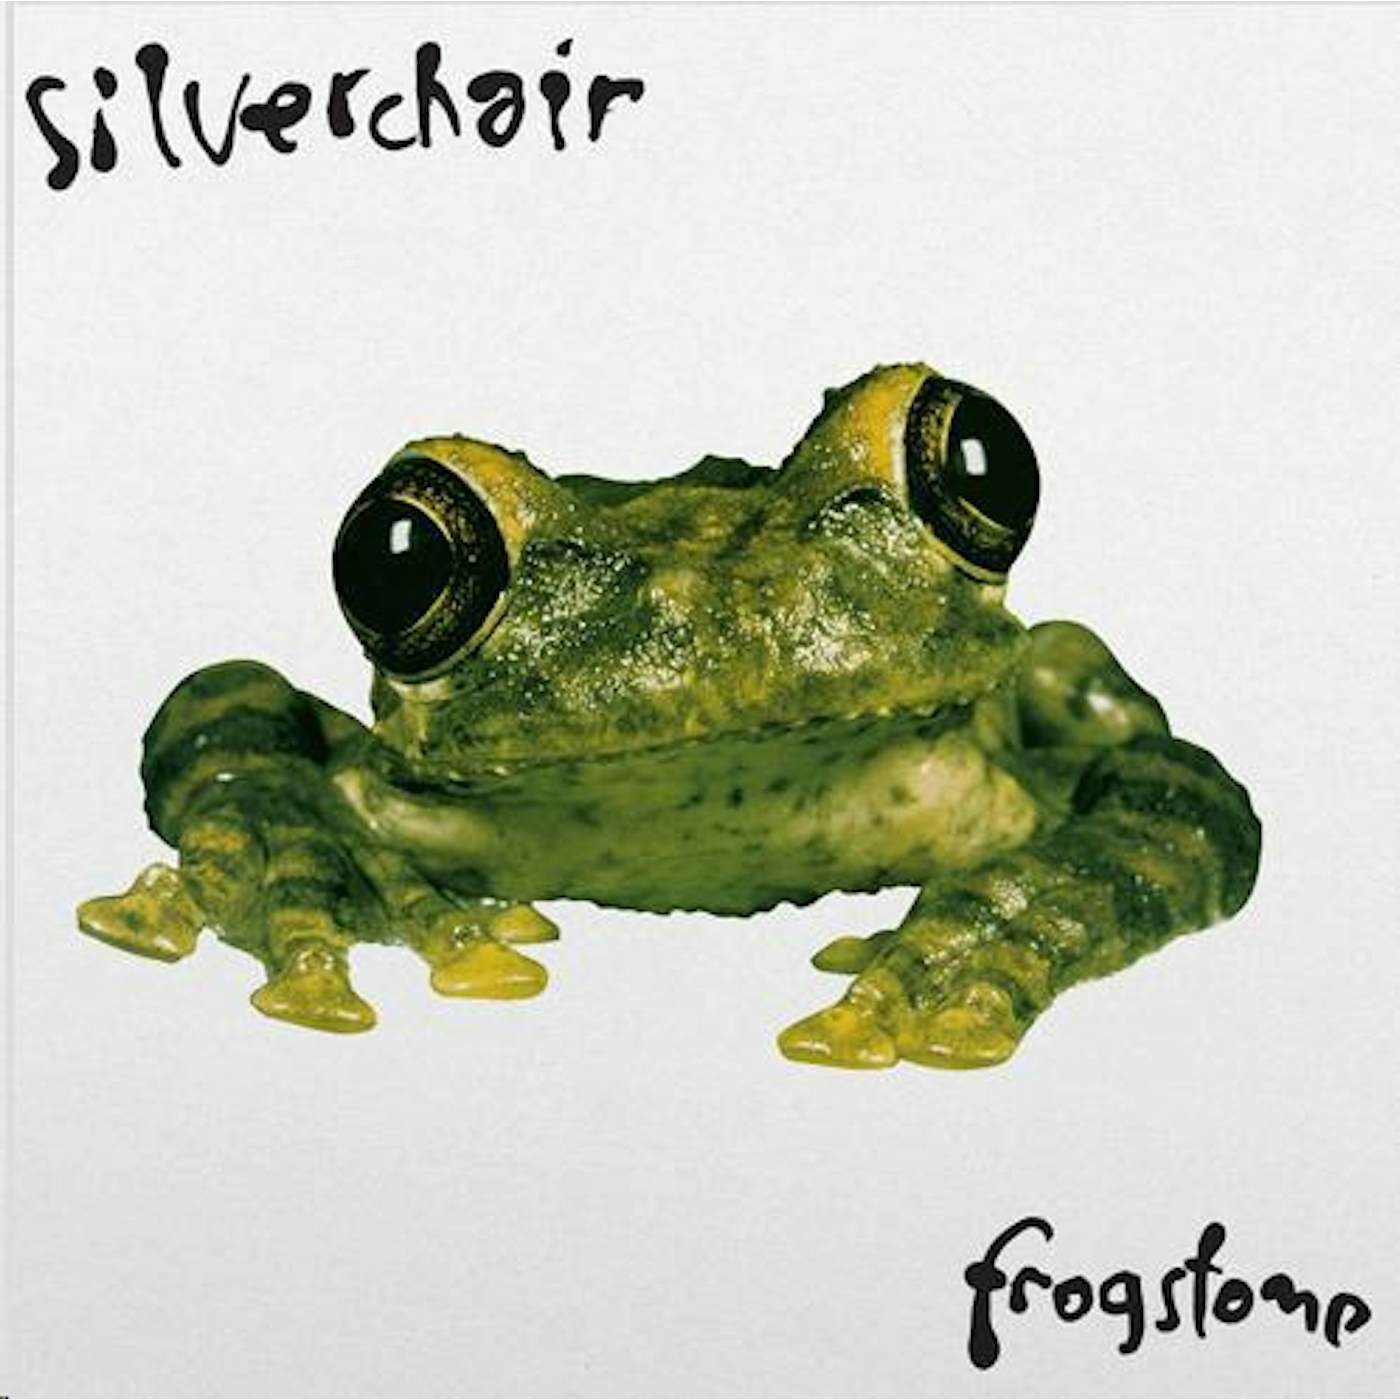 Silverchair Frogstomp (2LP/180g/clear transparent vinyl)